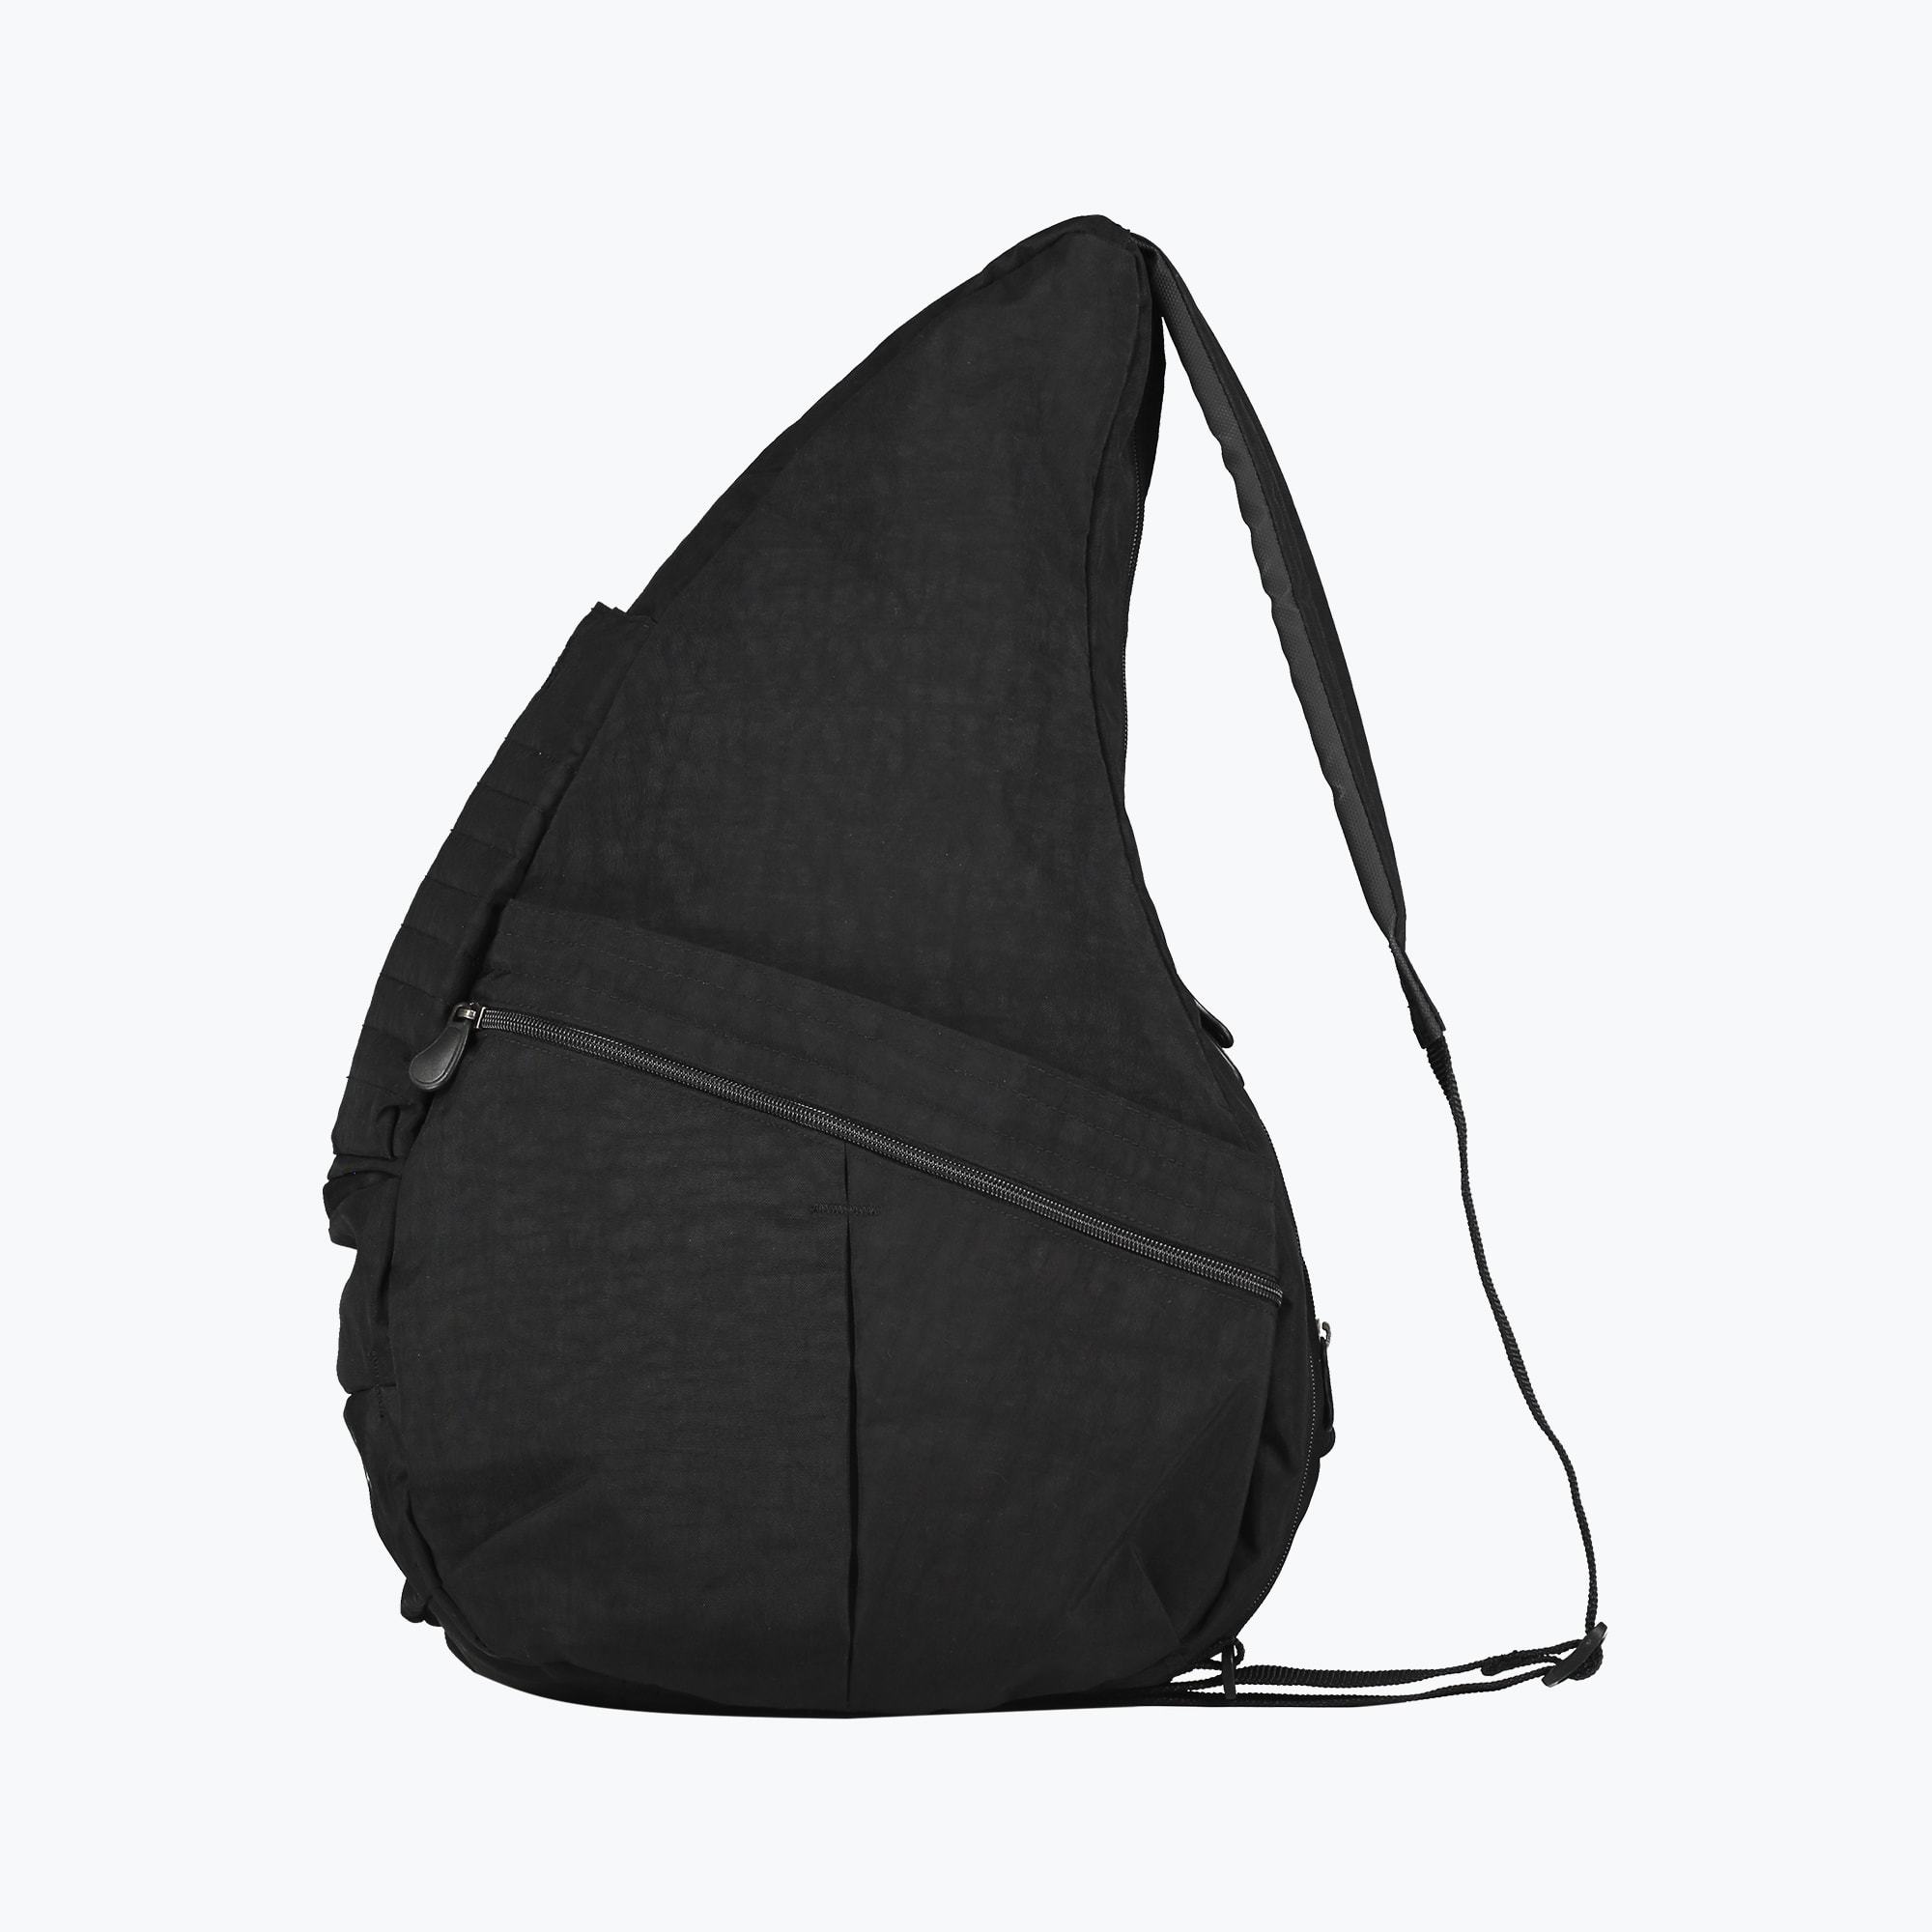 Textured Nylon Black Big Bag by The Healthy Back Bag